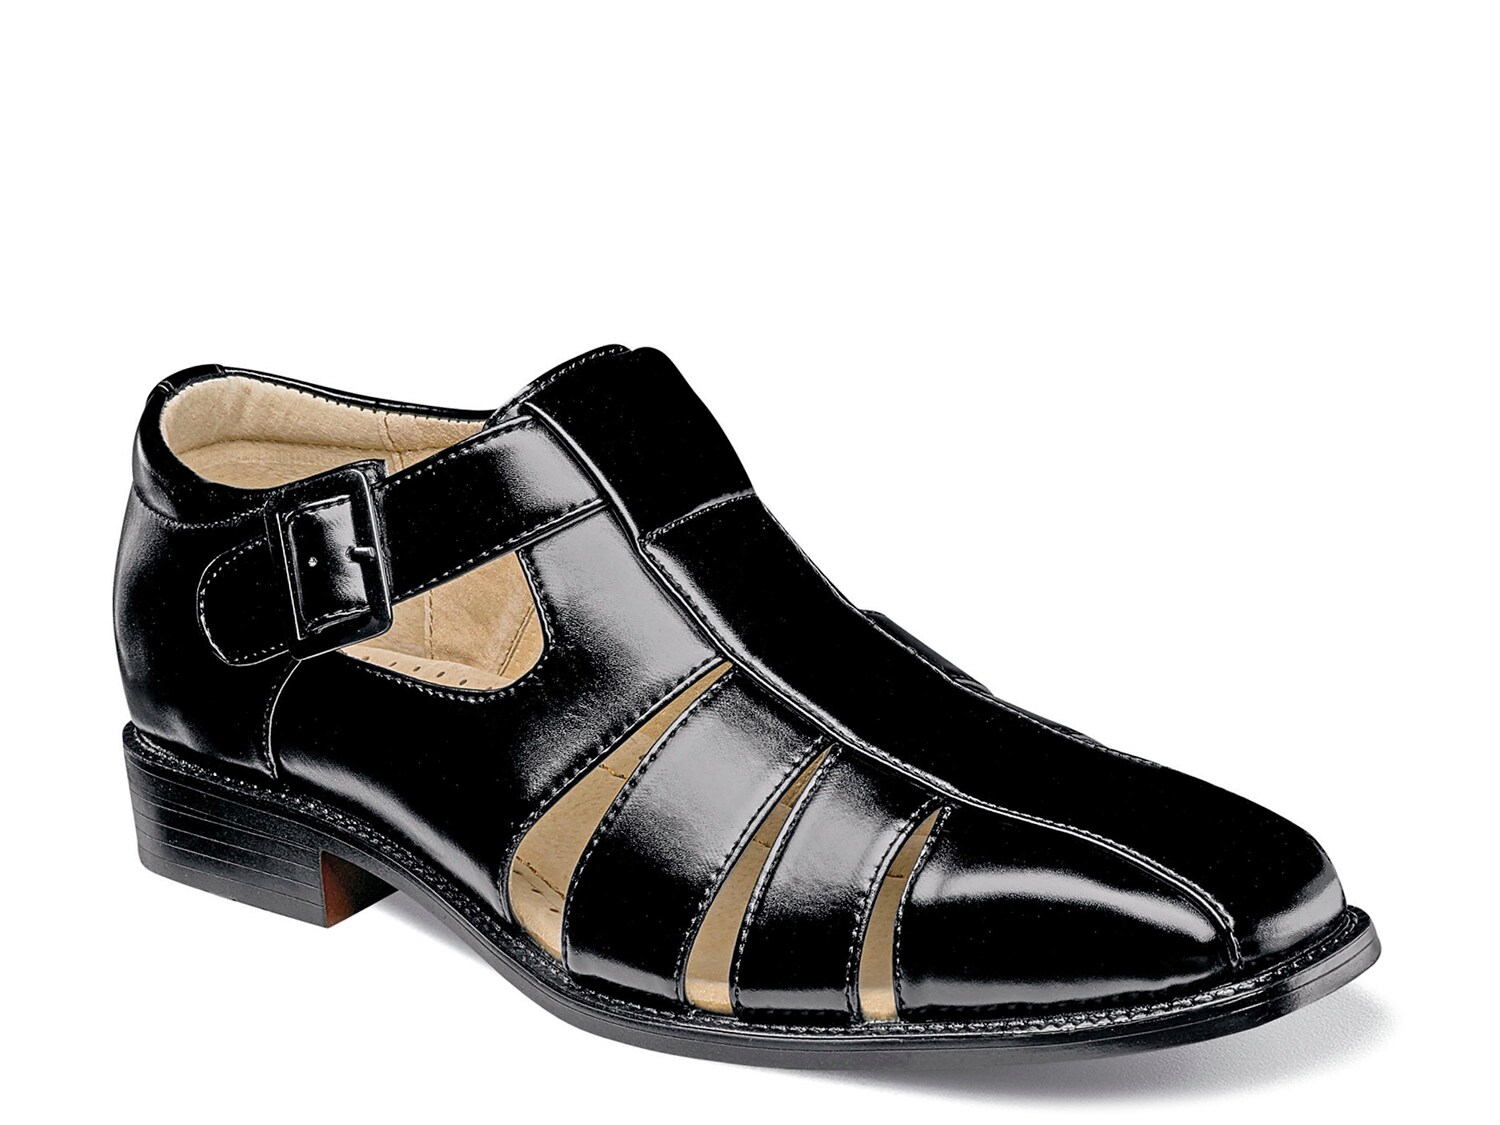 stacy adams calisto sandal